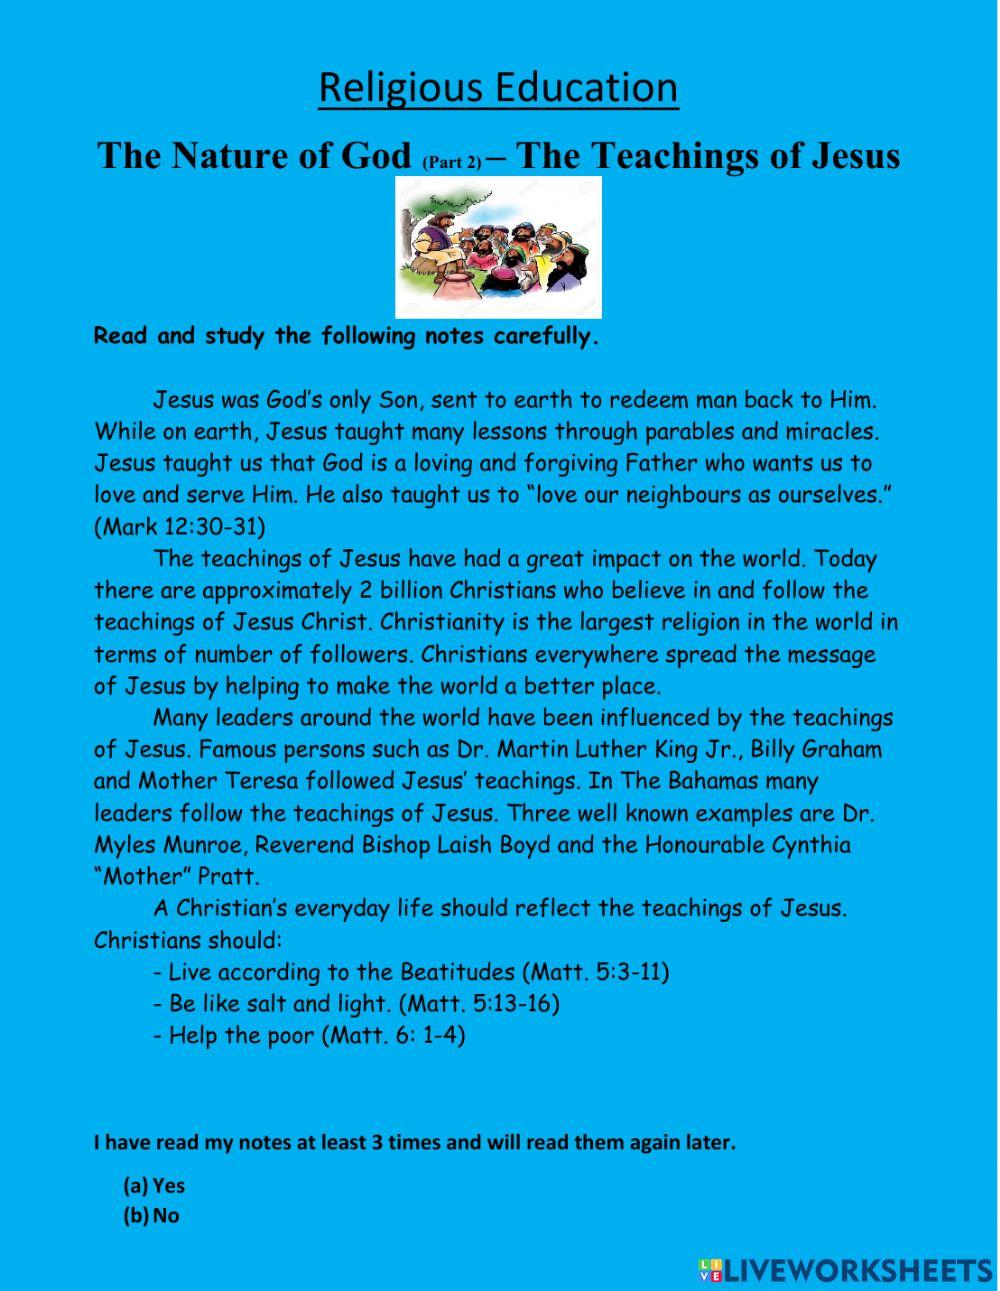 The Nature of God- Jesus' Teachings